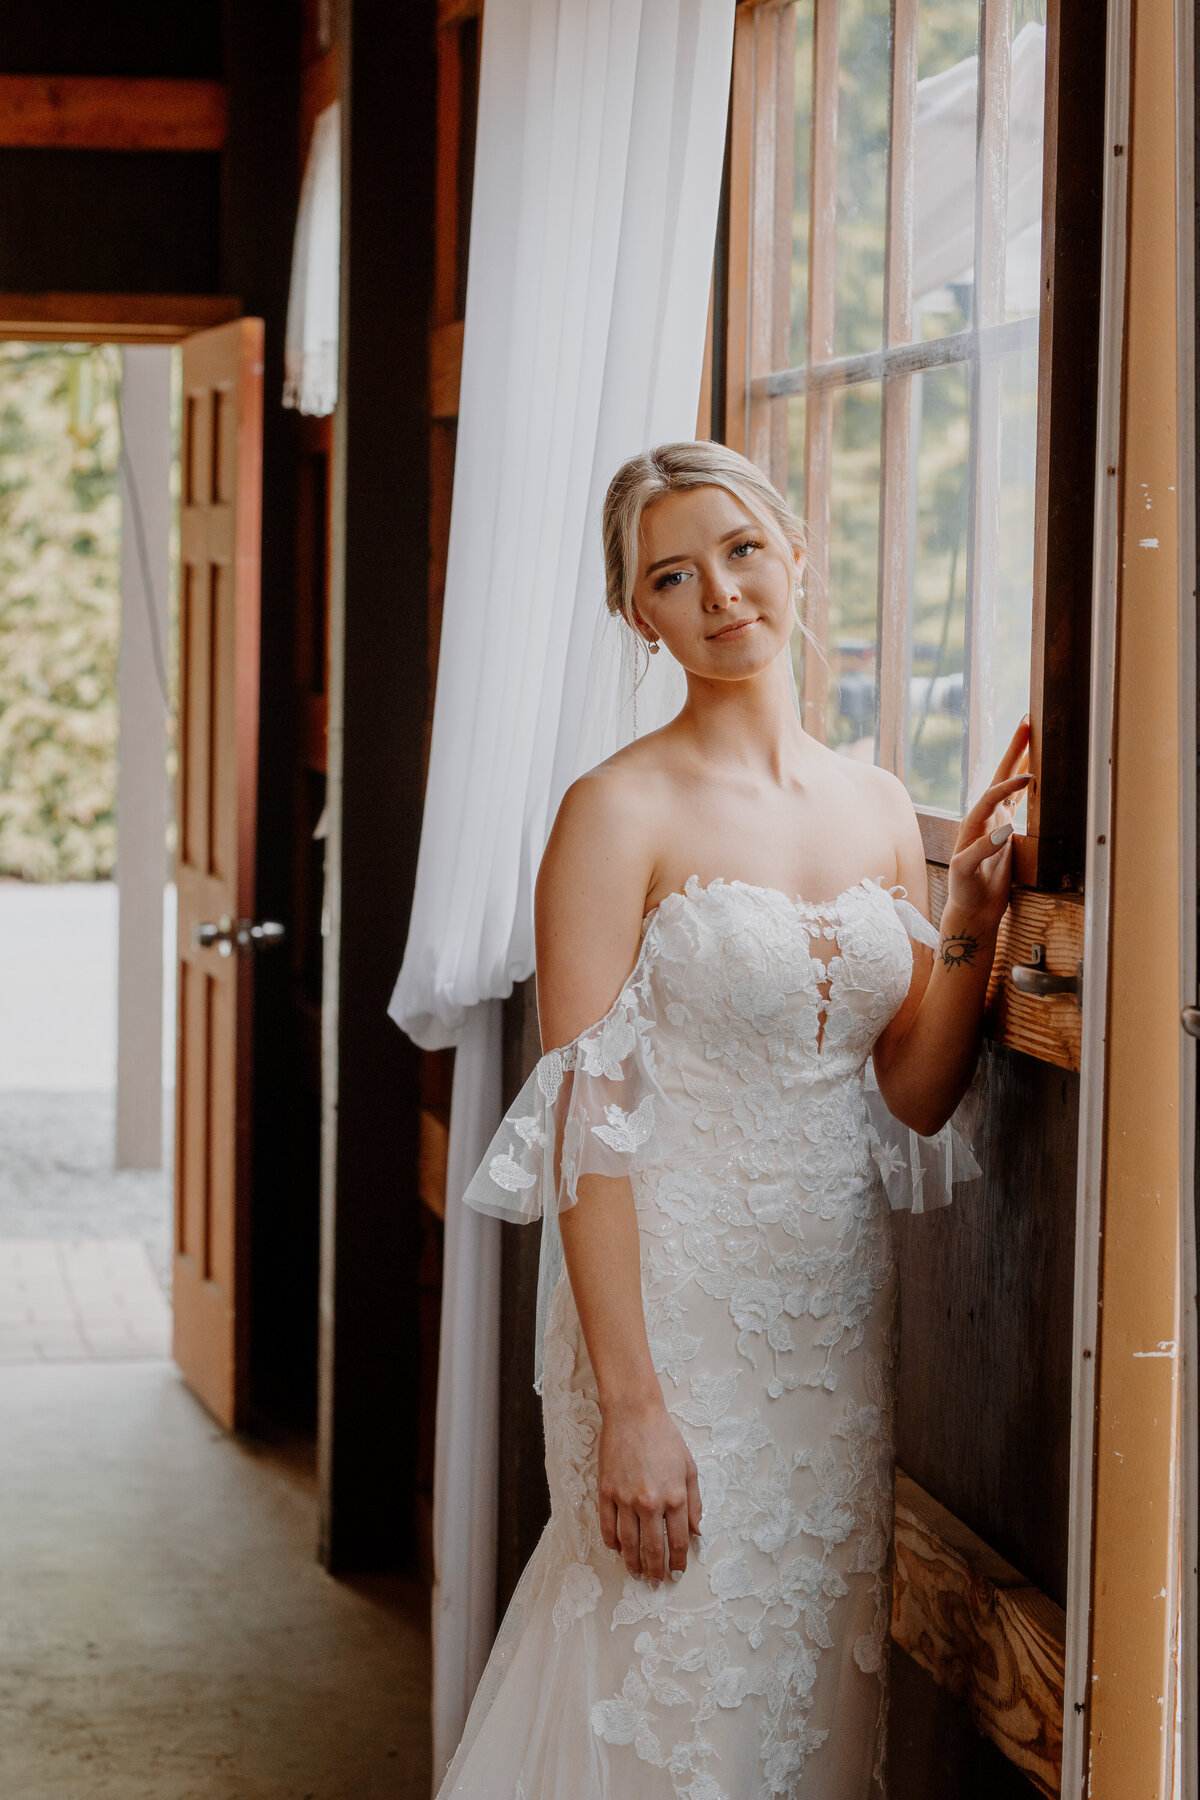 Bride inside smiling next to window